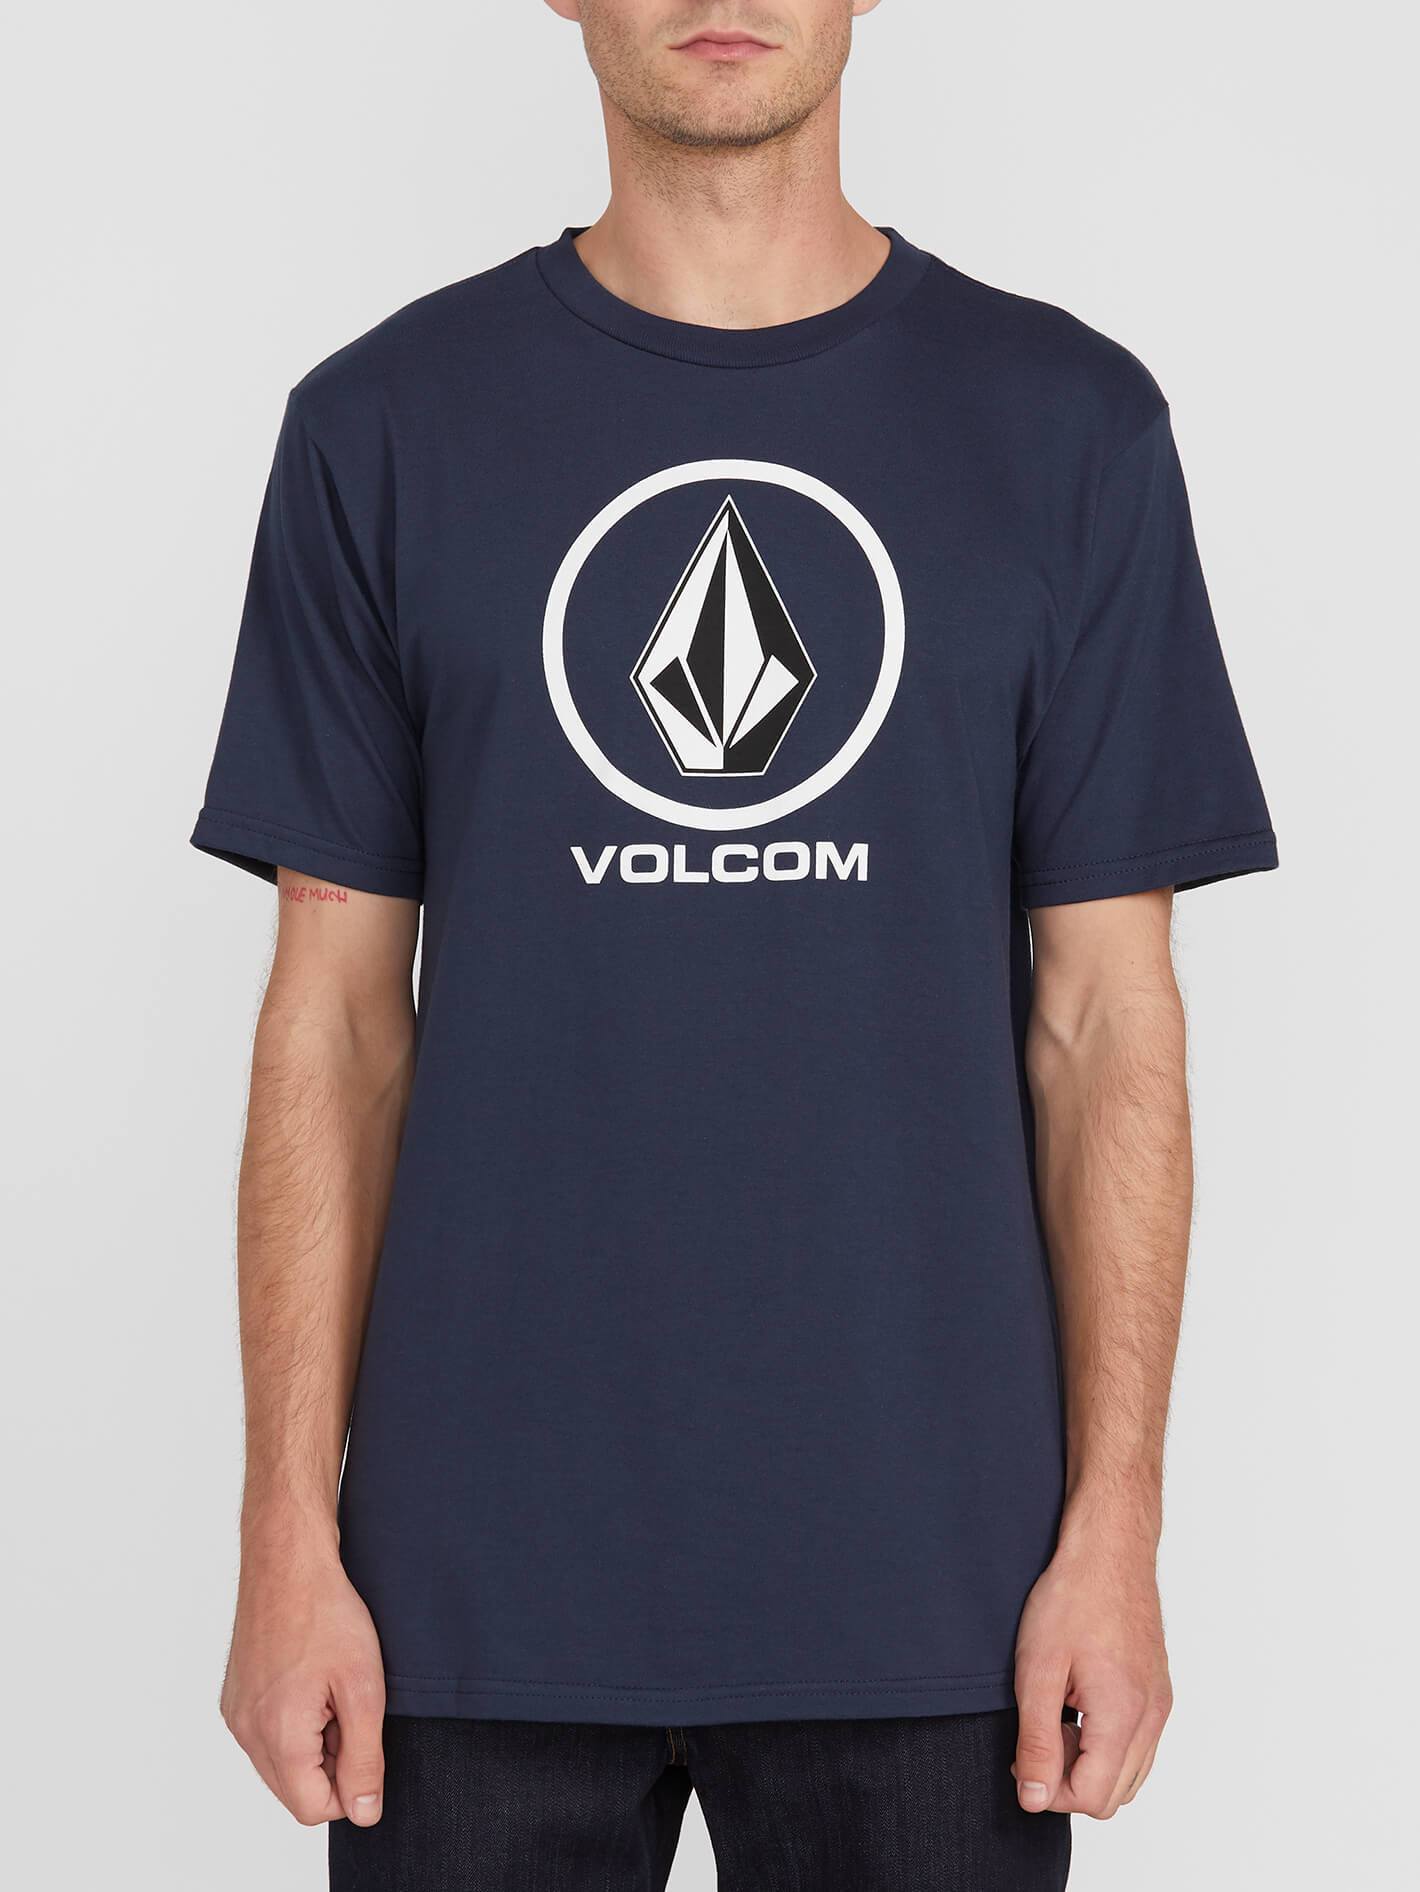 Volcom Crisp Stone T-Shirt - 88 Gear